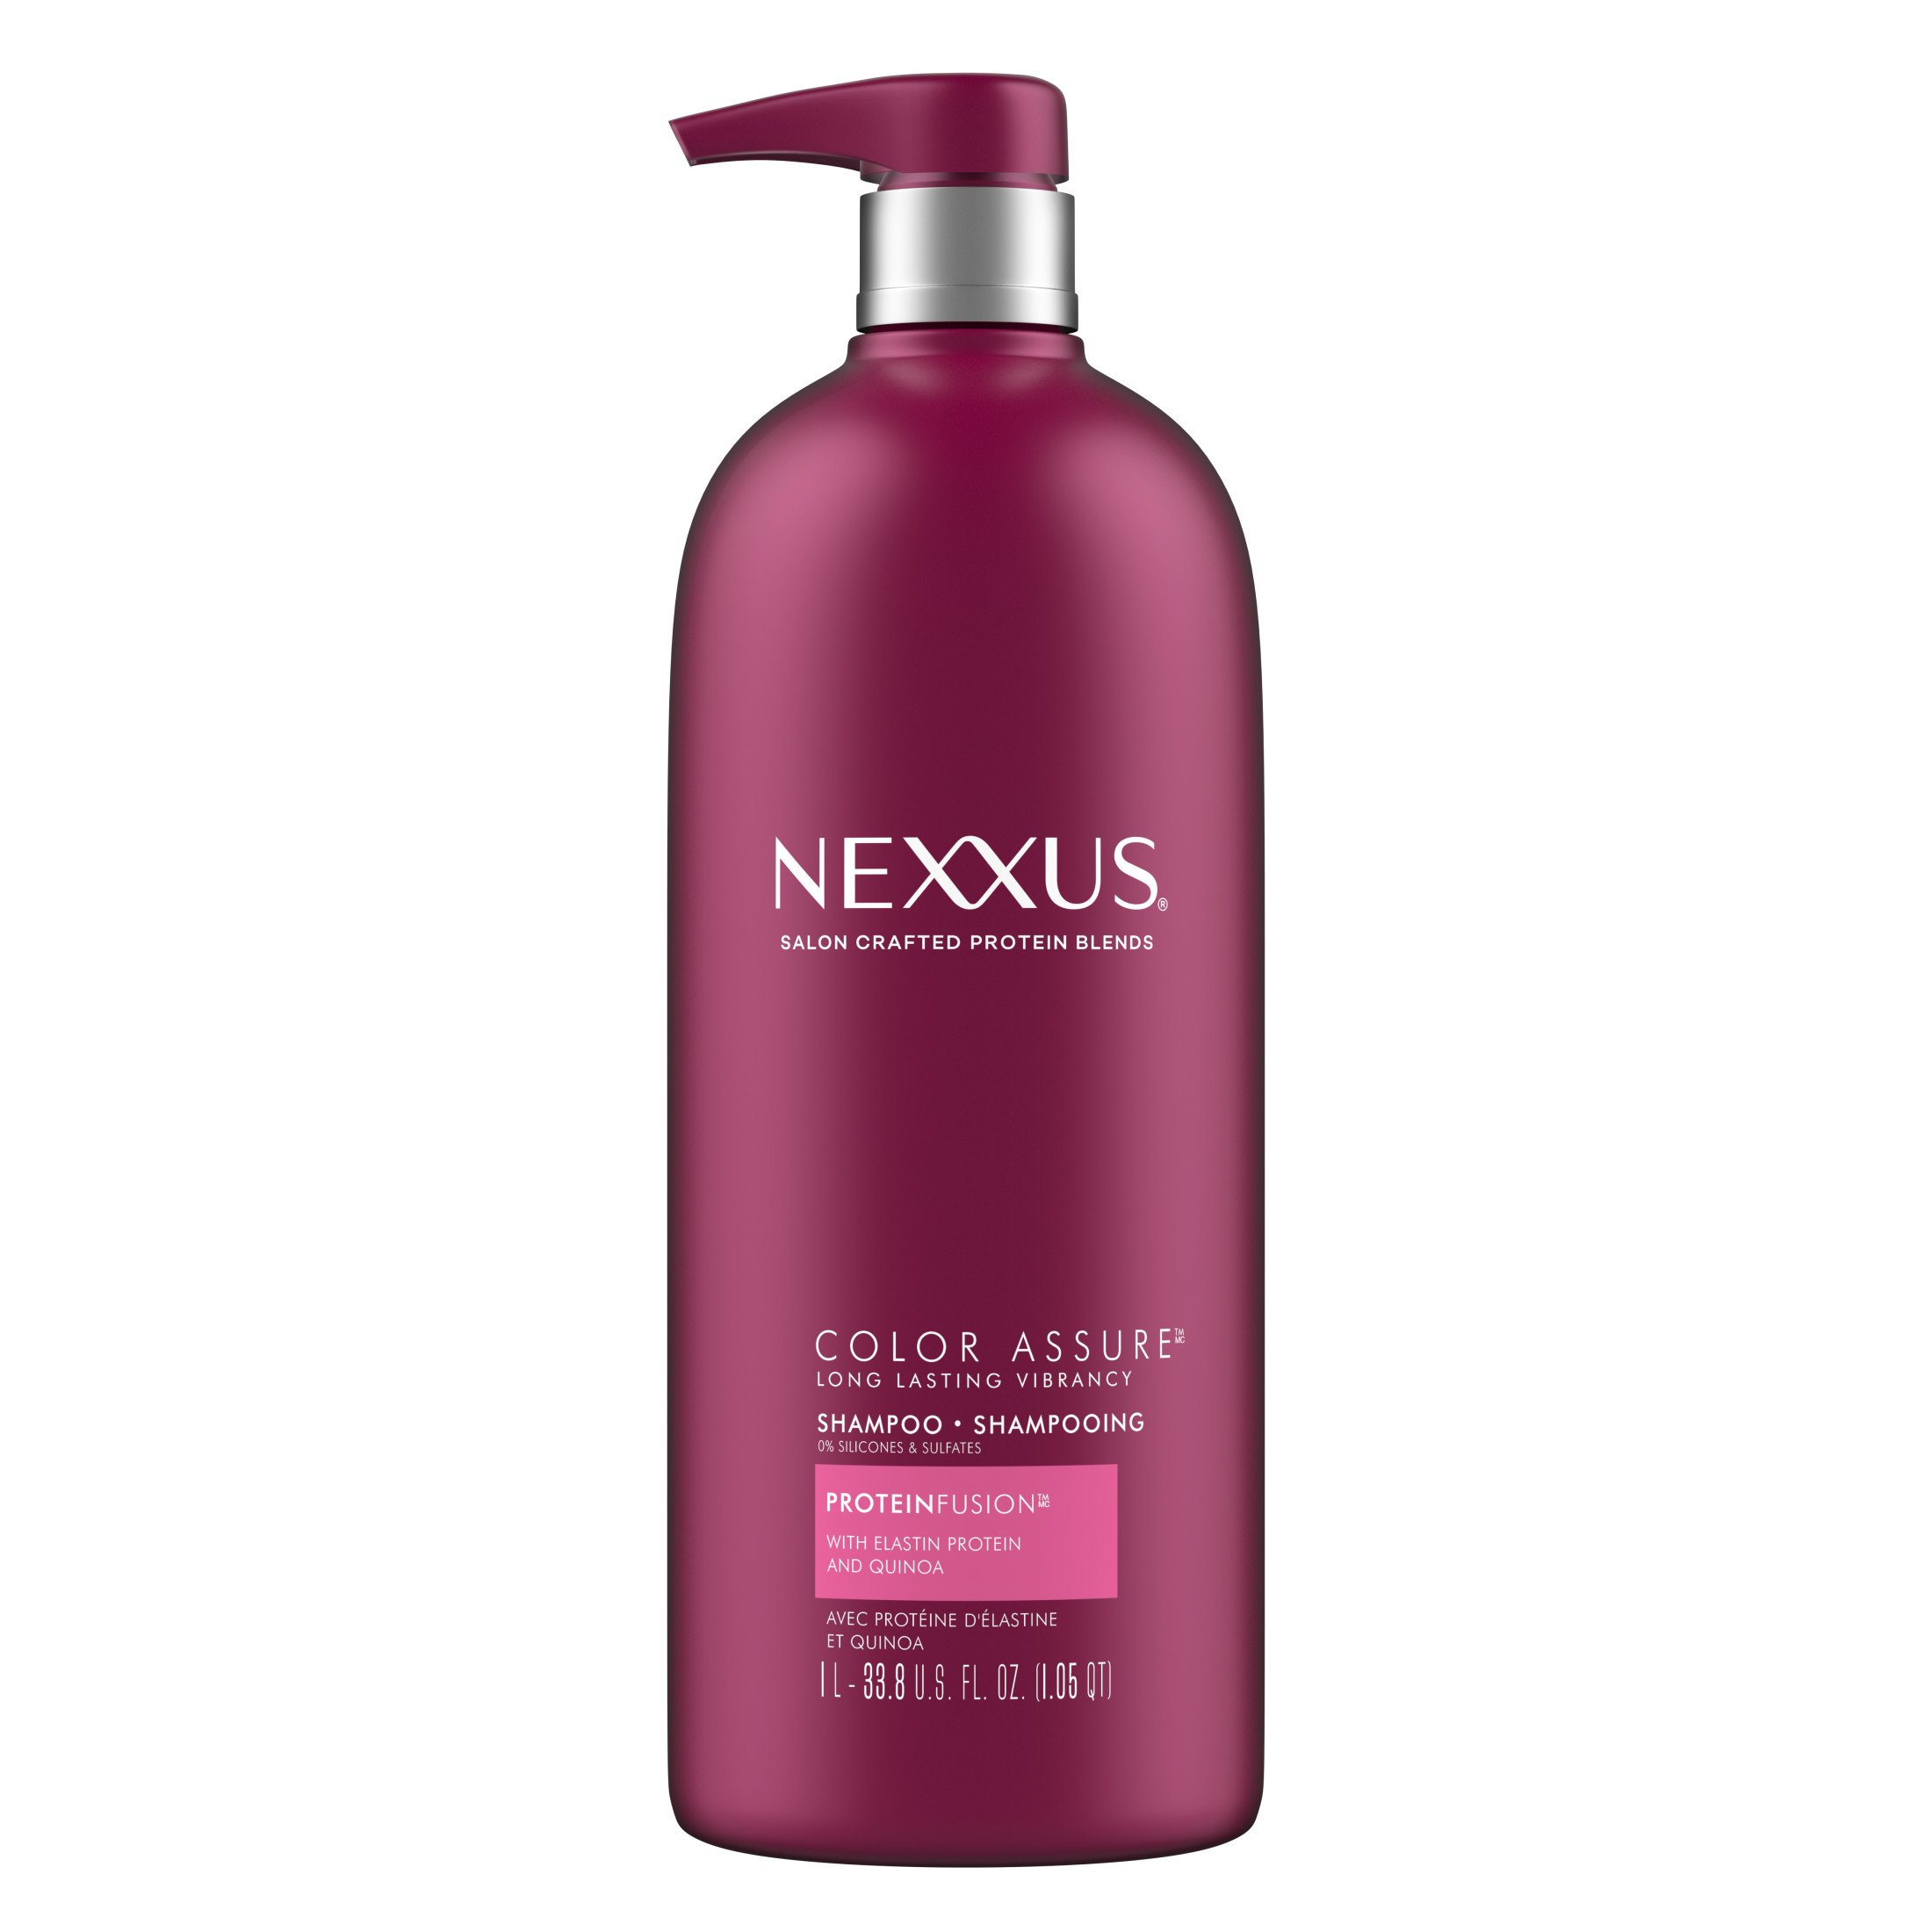 Nexxus Color Assure Long Lasting Vibrancy Protein Fusion Shampoo 33.8 fl oz - image 1 of 12